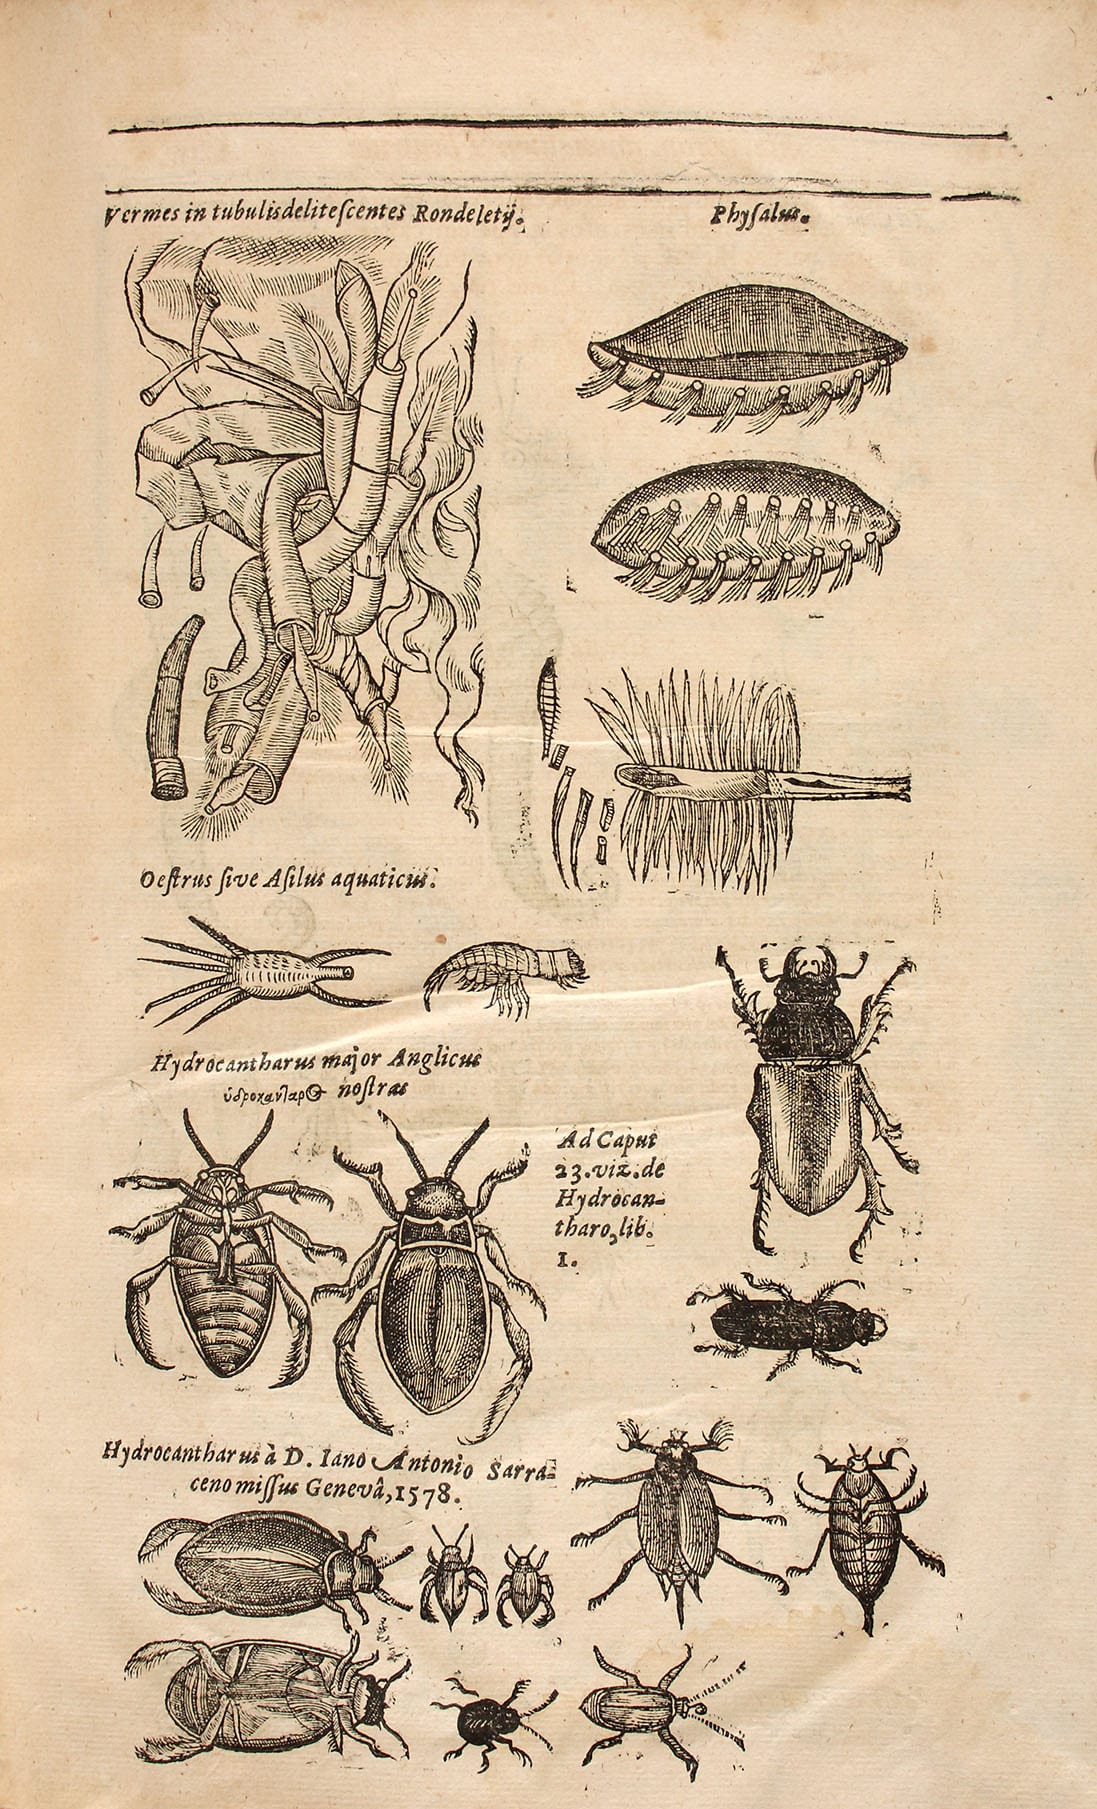 Thomas Moffett (1553-1604): Insectorum sive minimorum animalium theatrum - Abbildung eines Wasserkäfers